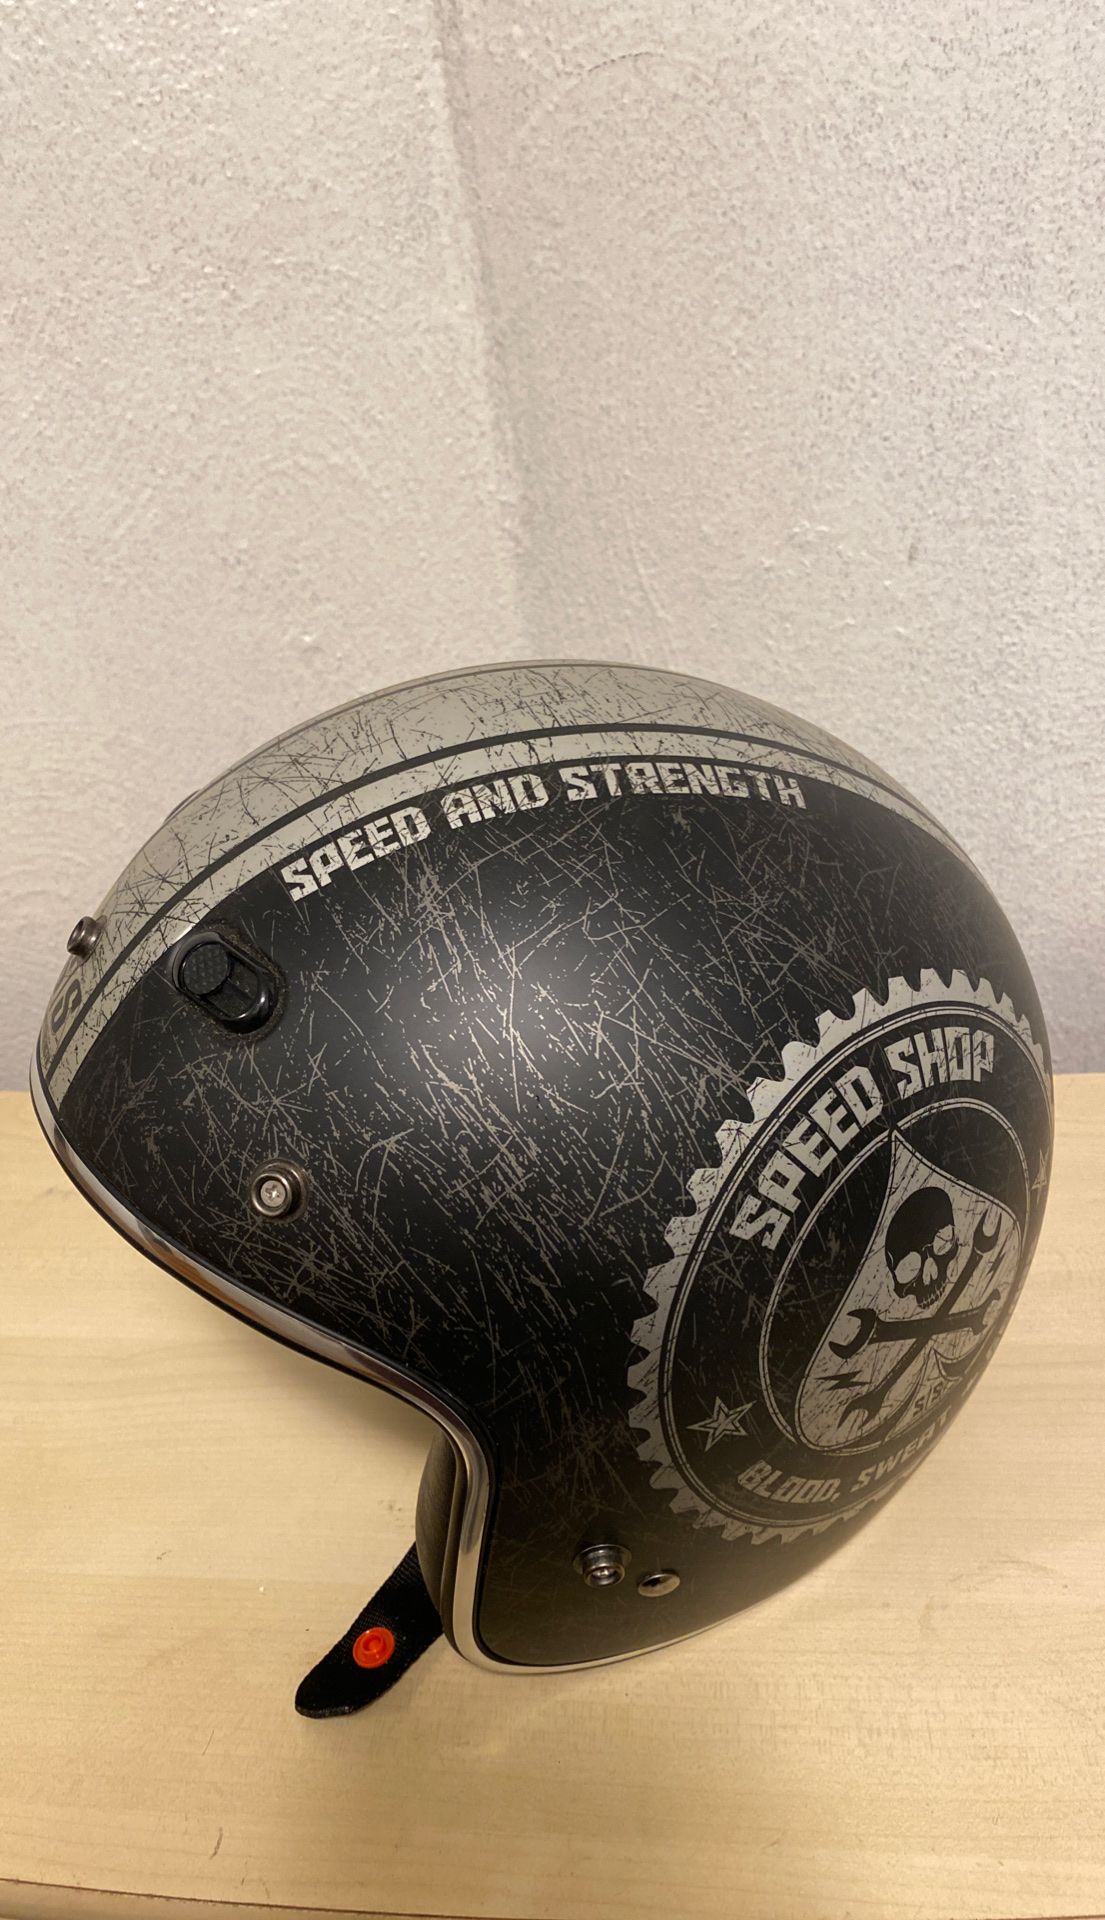 3/4 Speed and Strength speed shop helmet